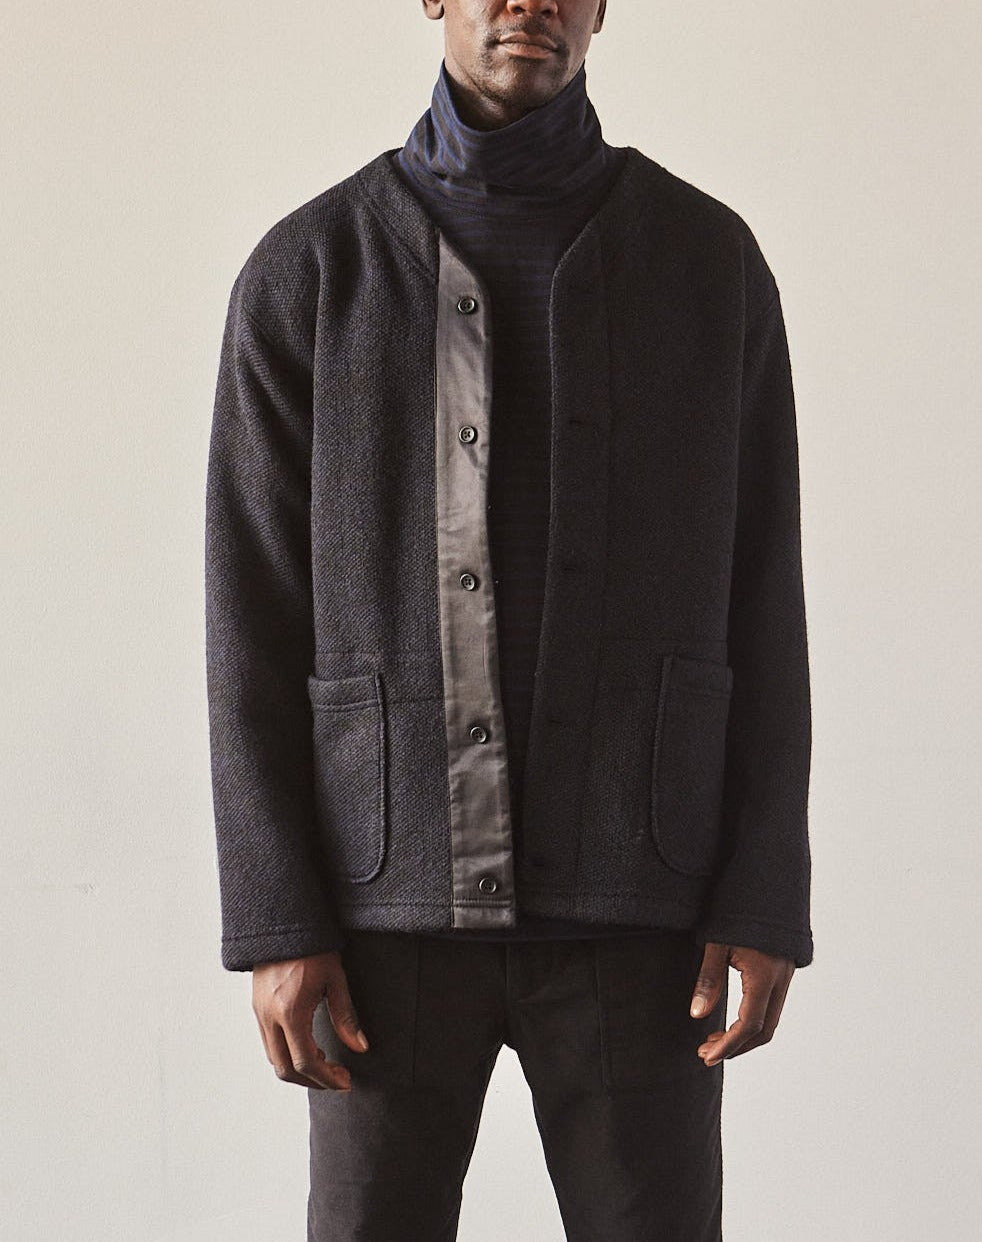 Engineered Garments Knit Cardigan Jacket, Navy/Black | Glasswing